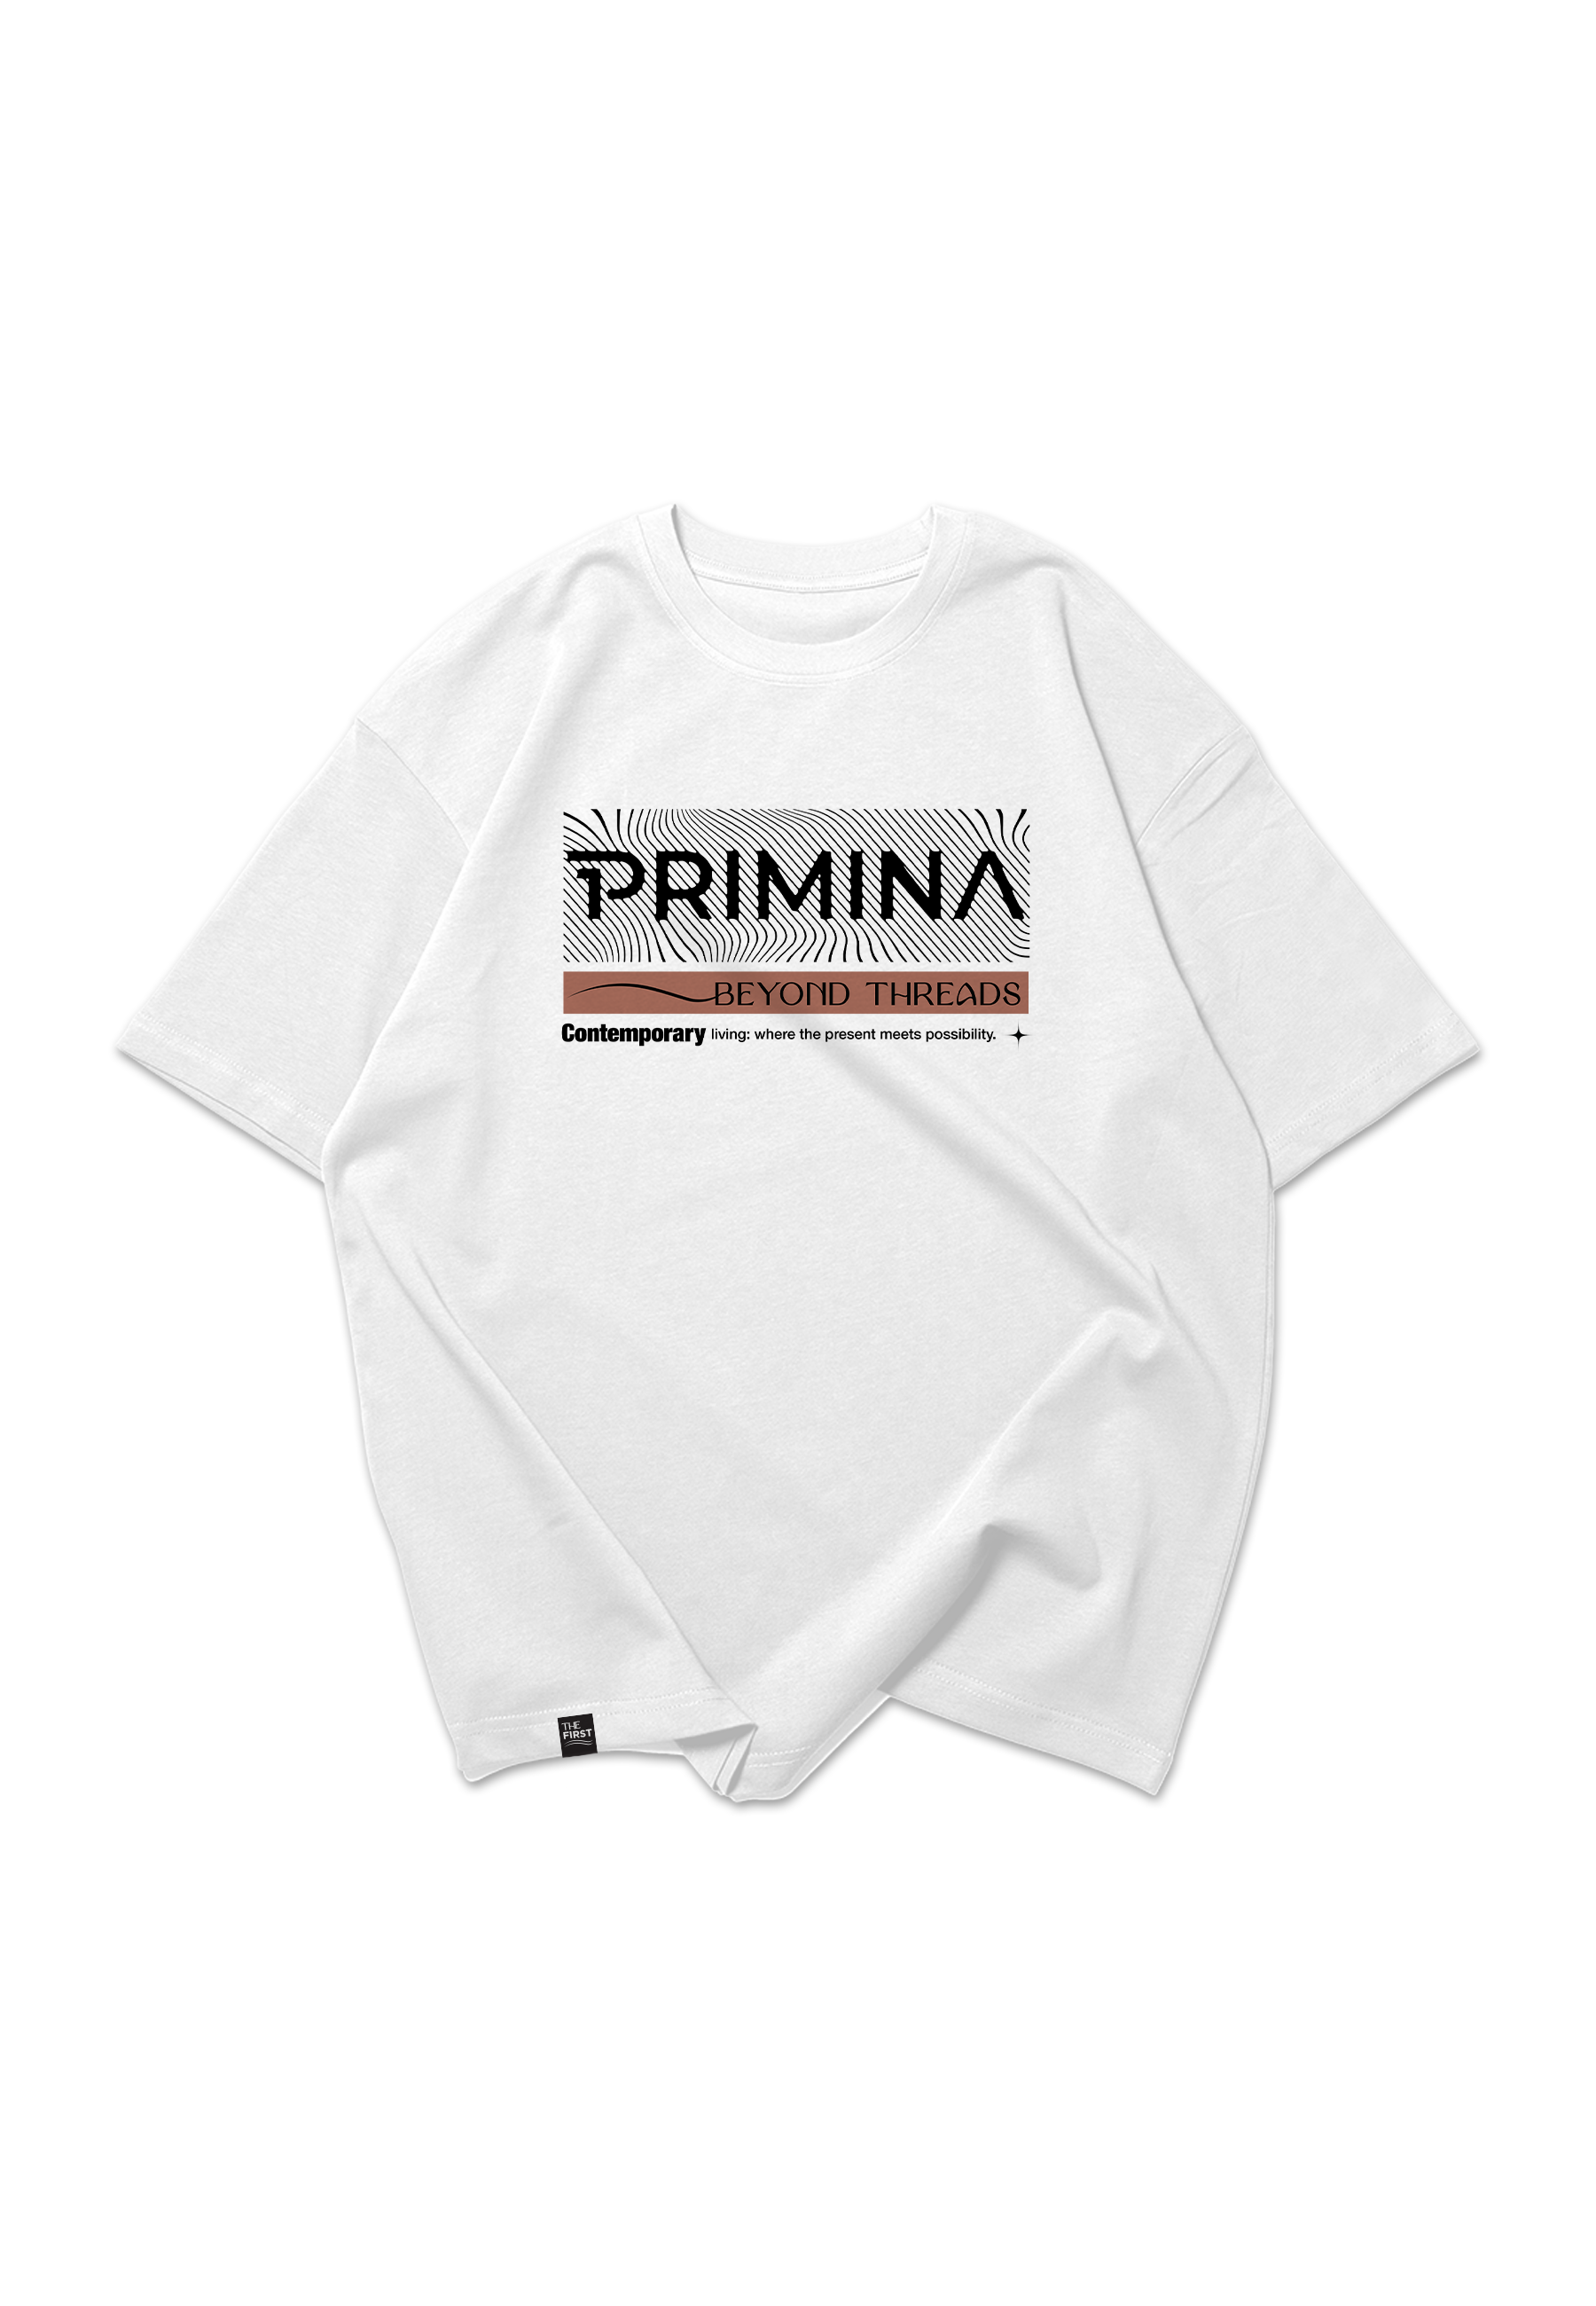 Buy Now Oversized Men T-Shirt Online In Dubai | Contemporary | Primina